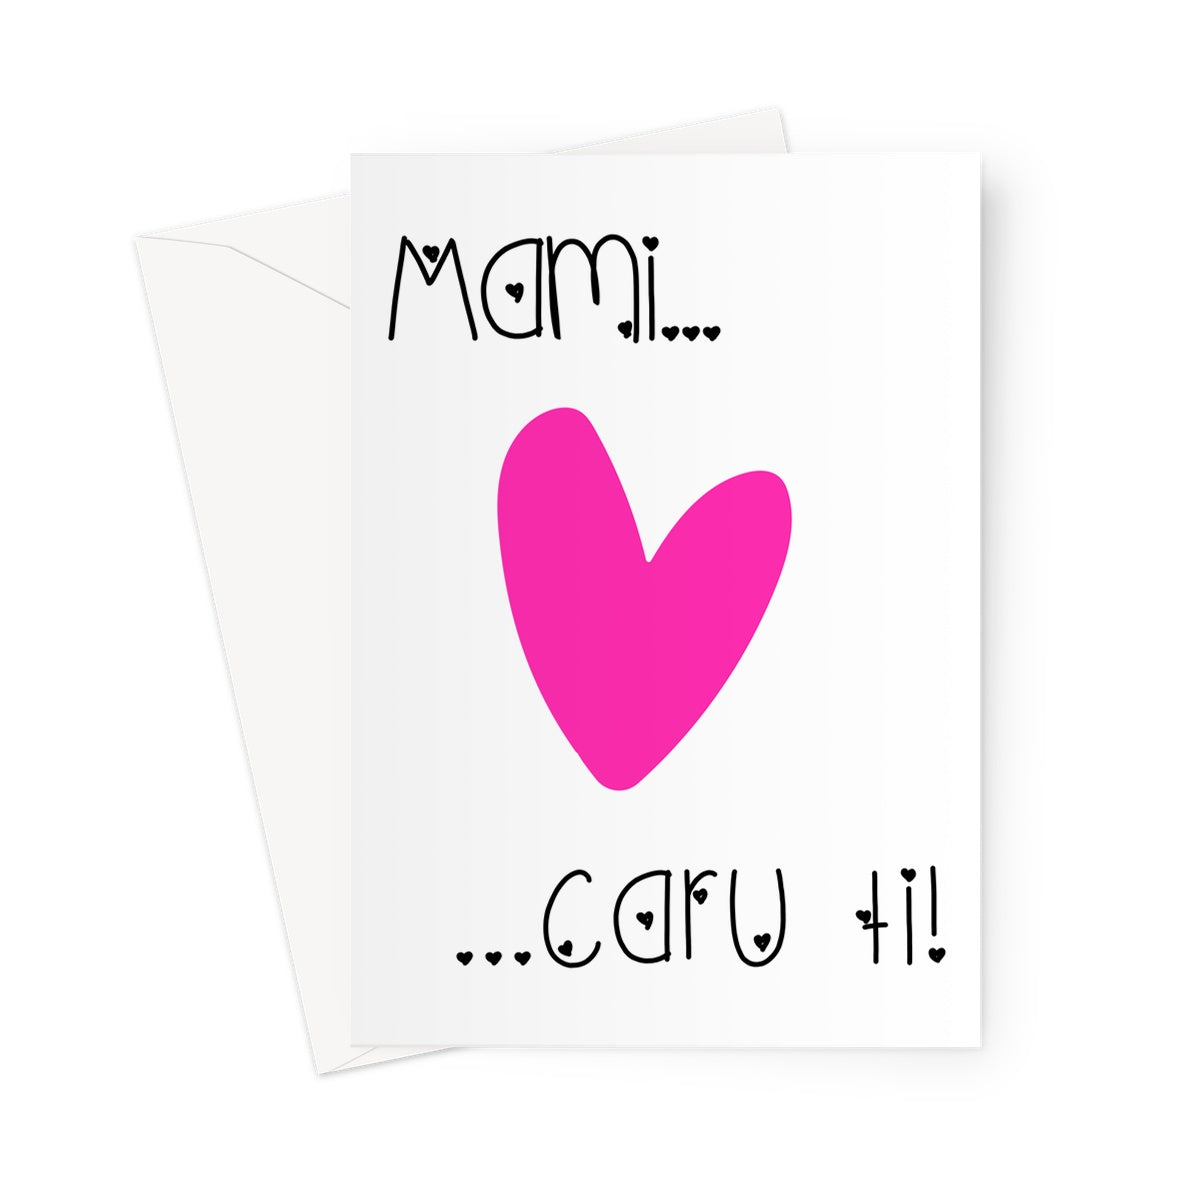 Mami Caru Ti Greeting Card | Love you Mami Welsh Greeting Card